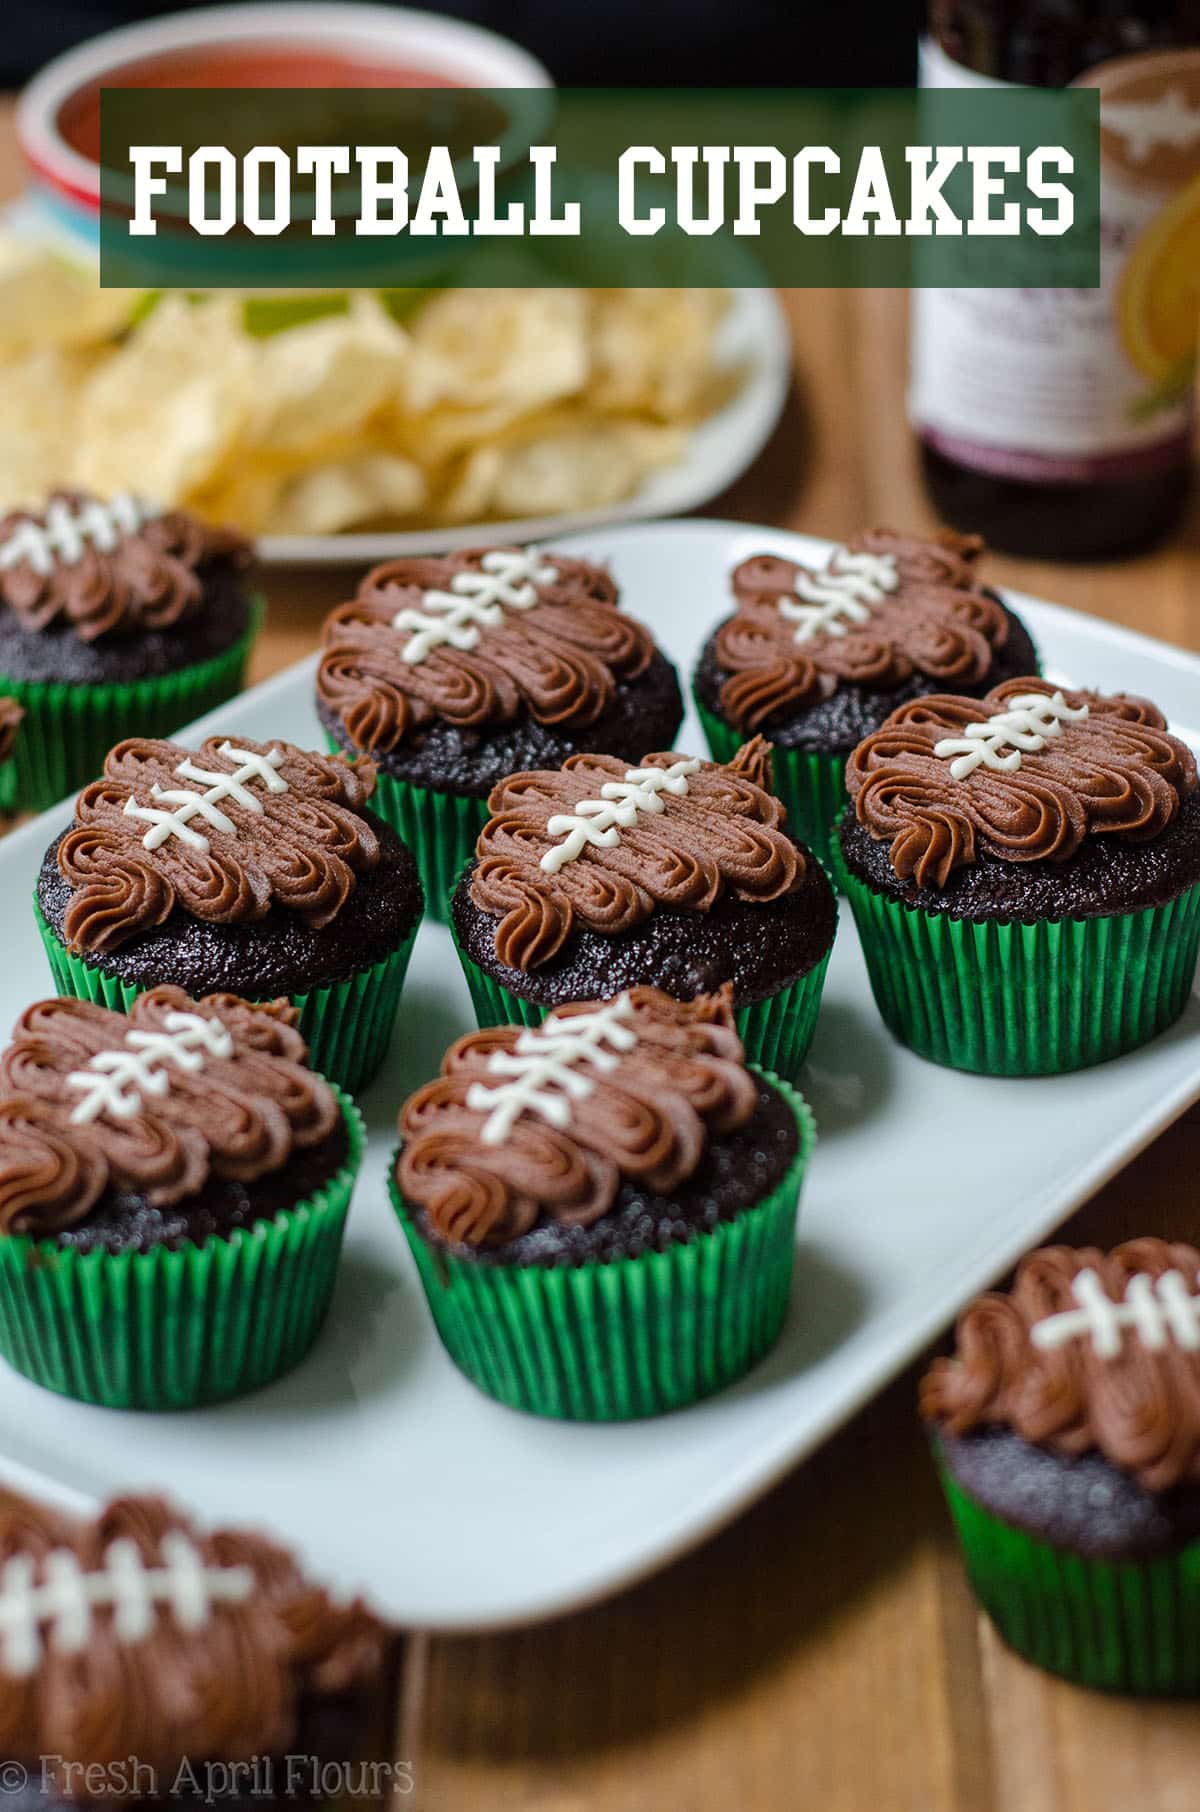 How To Make Football Cupcakes